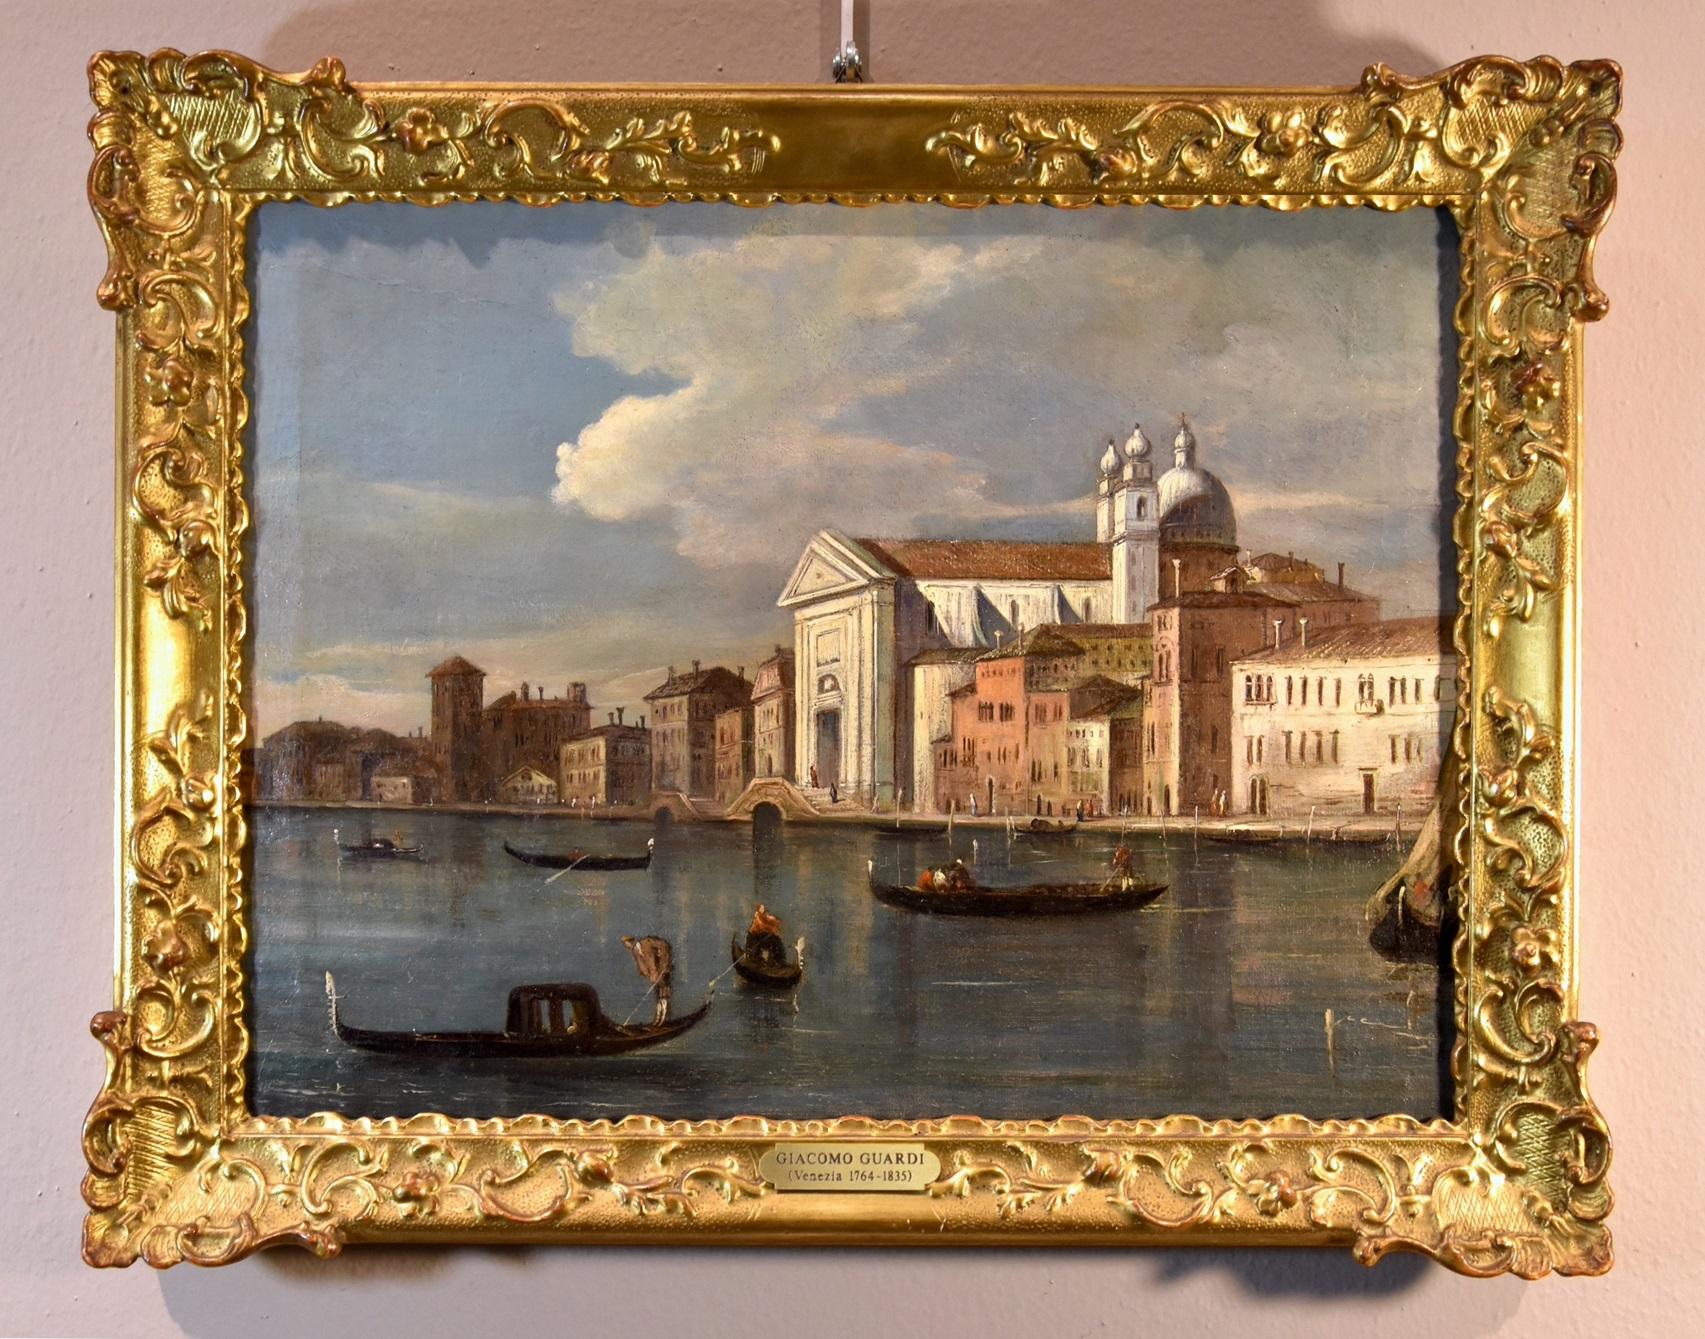 Giacomo Guardi (venice, 1764 - 1835) Landscape Painting – Ansicht Venedig Siehe Giudecca Guardi 18/19. Jahrhundert Gemälde Öl auf Leinwand Alter Meister